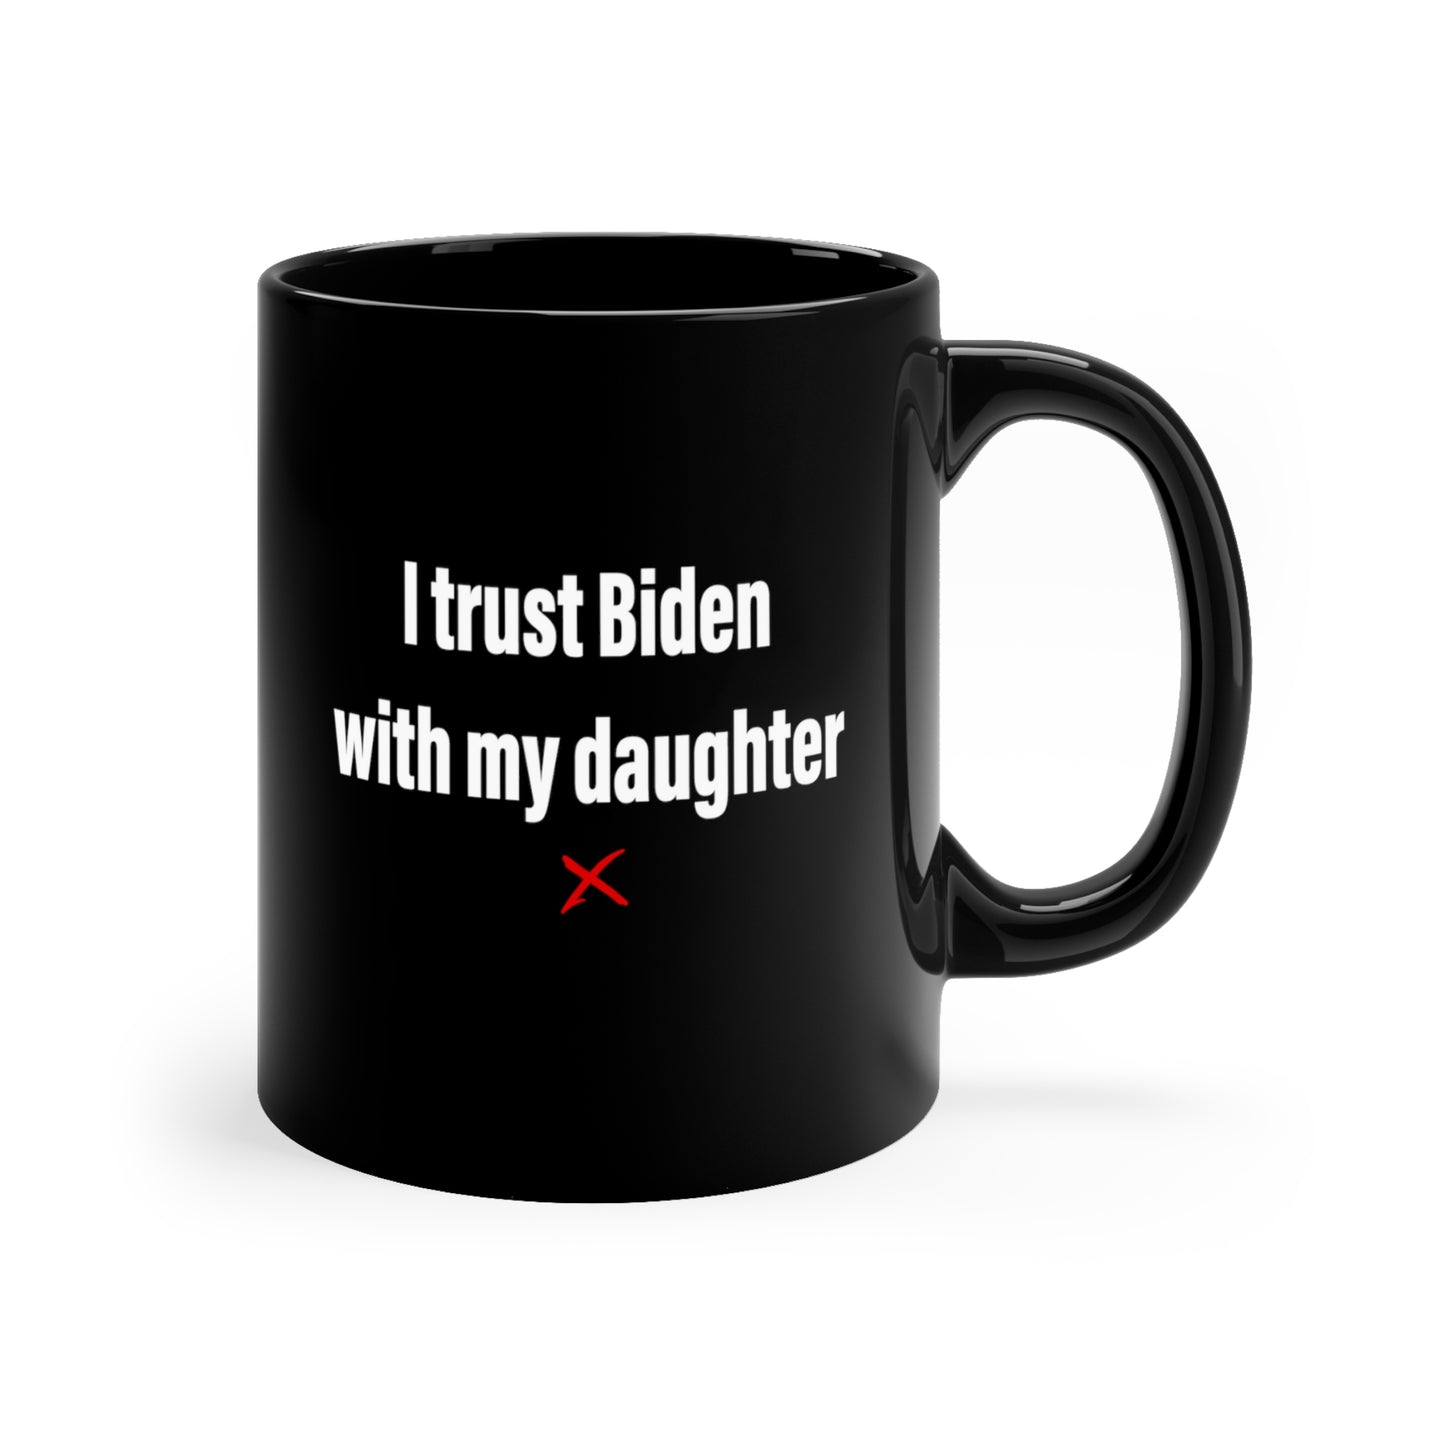 I trust Biden with my daughter - Mug